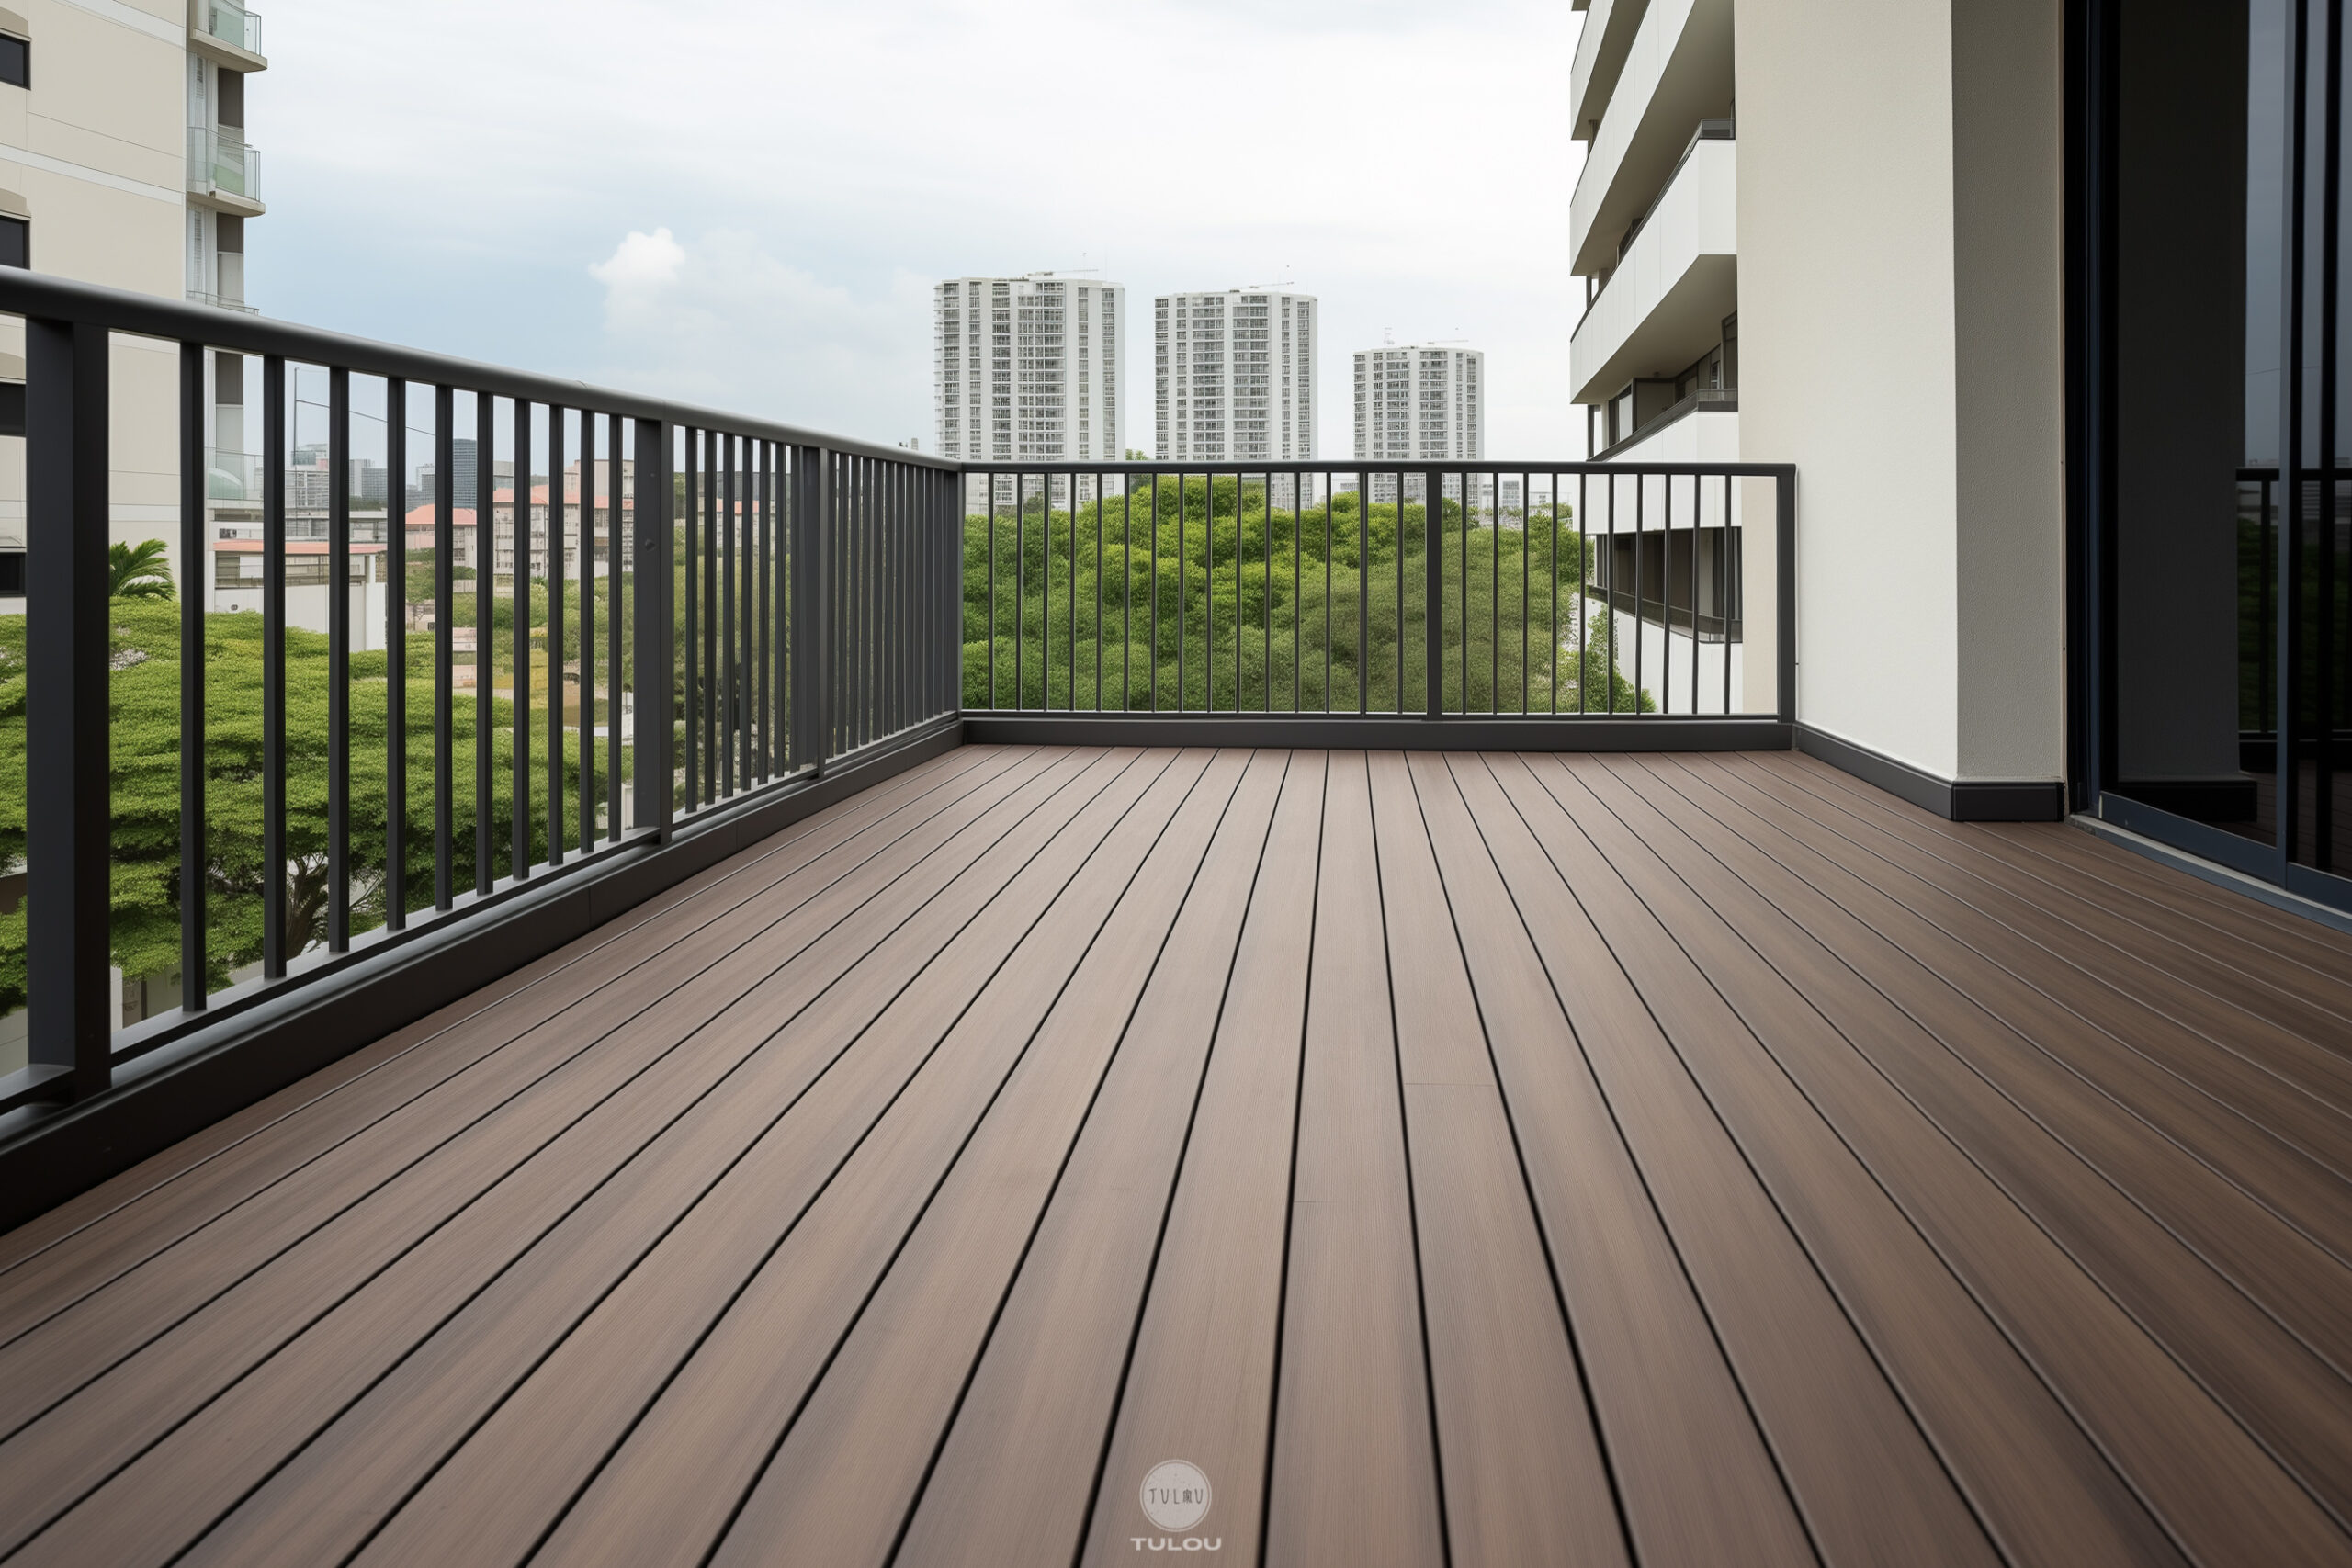 Tulou Condo scaled - Bungalow or Condo: Choosing Tulou's Composite Timber Decking for Your Singaporean Home